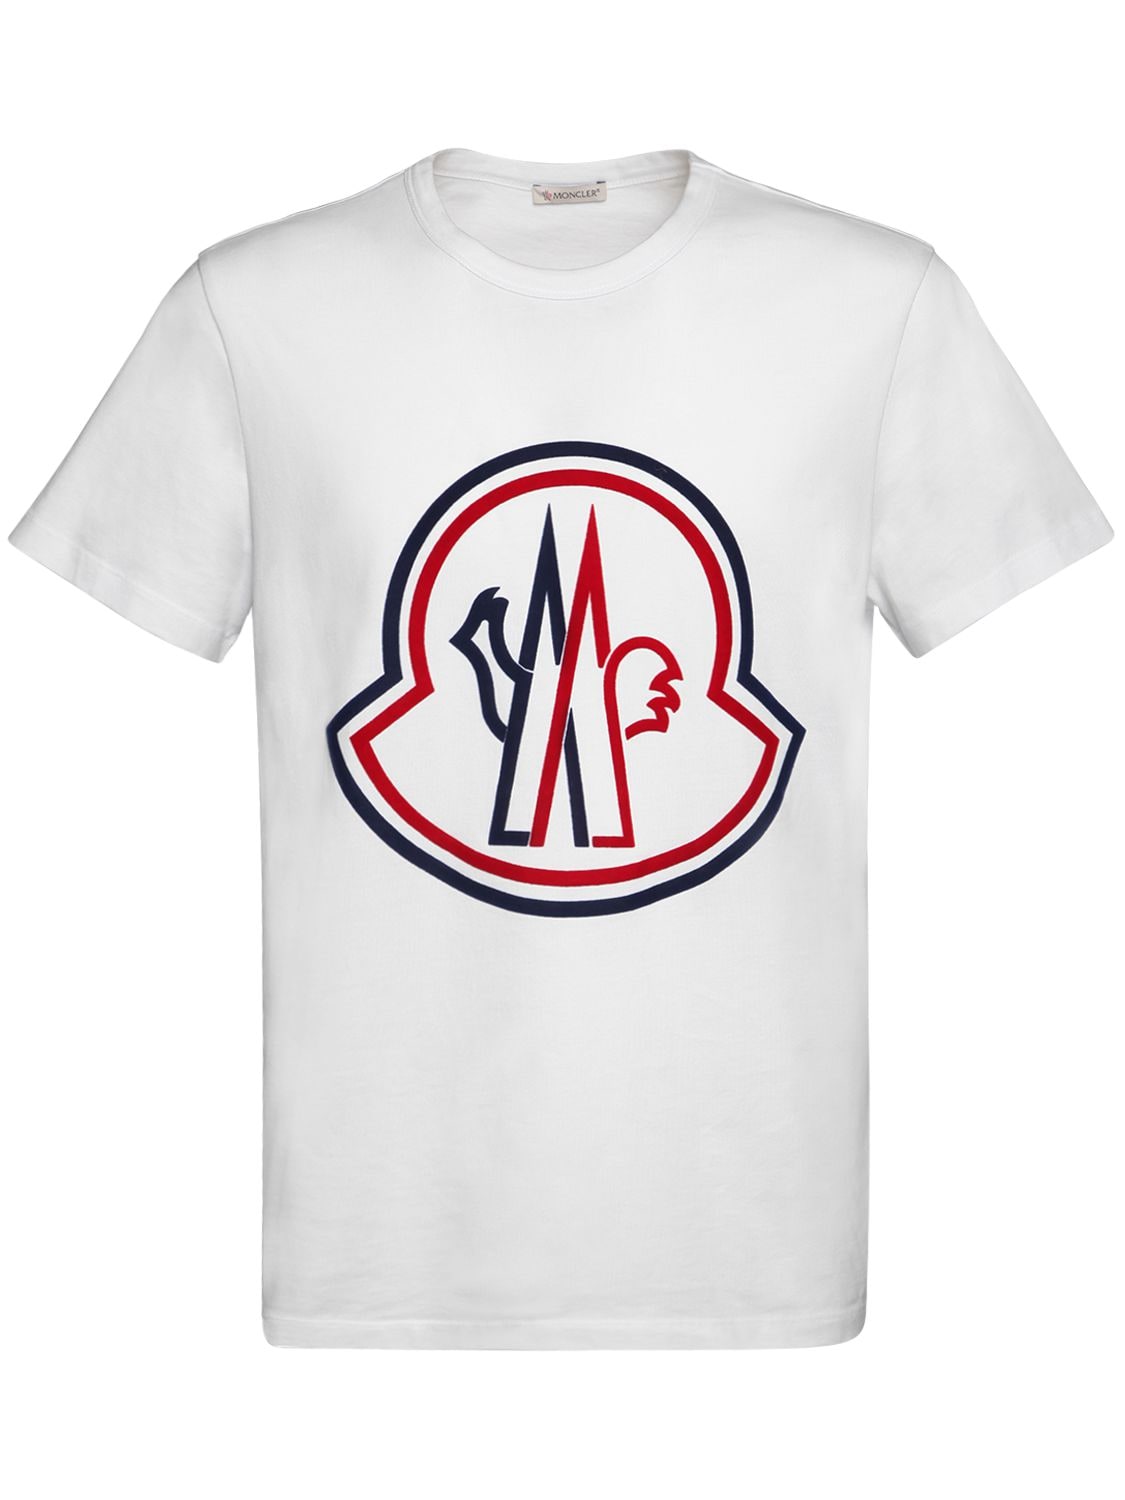 moncler t shirt logo